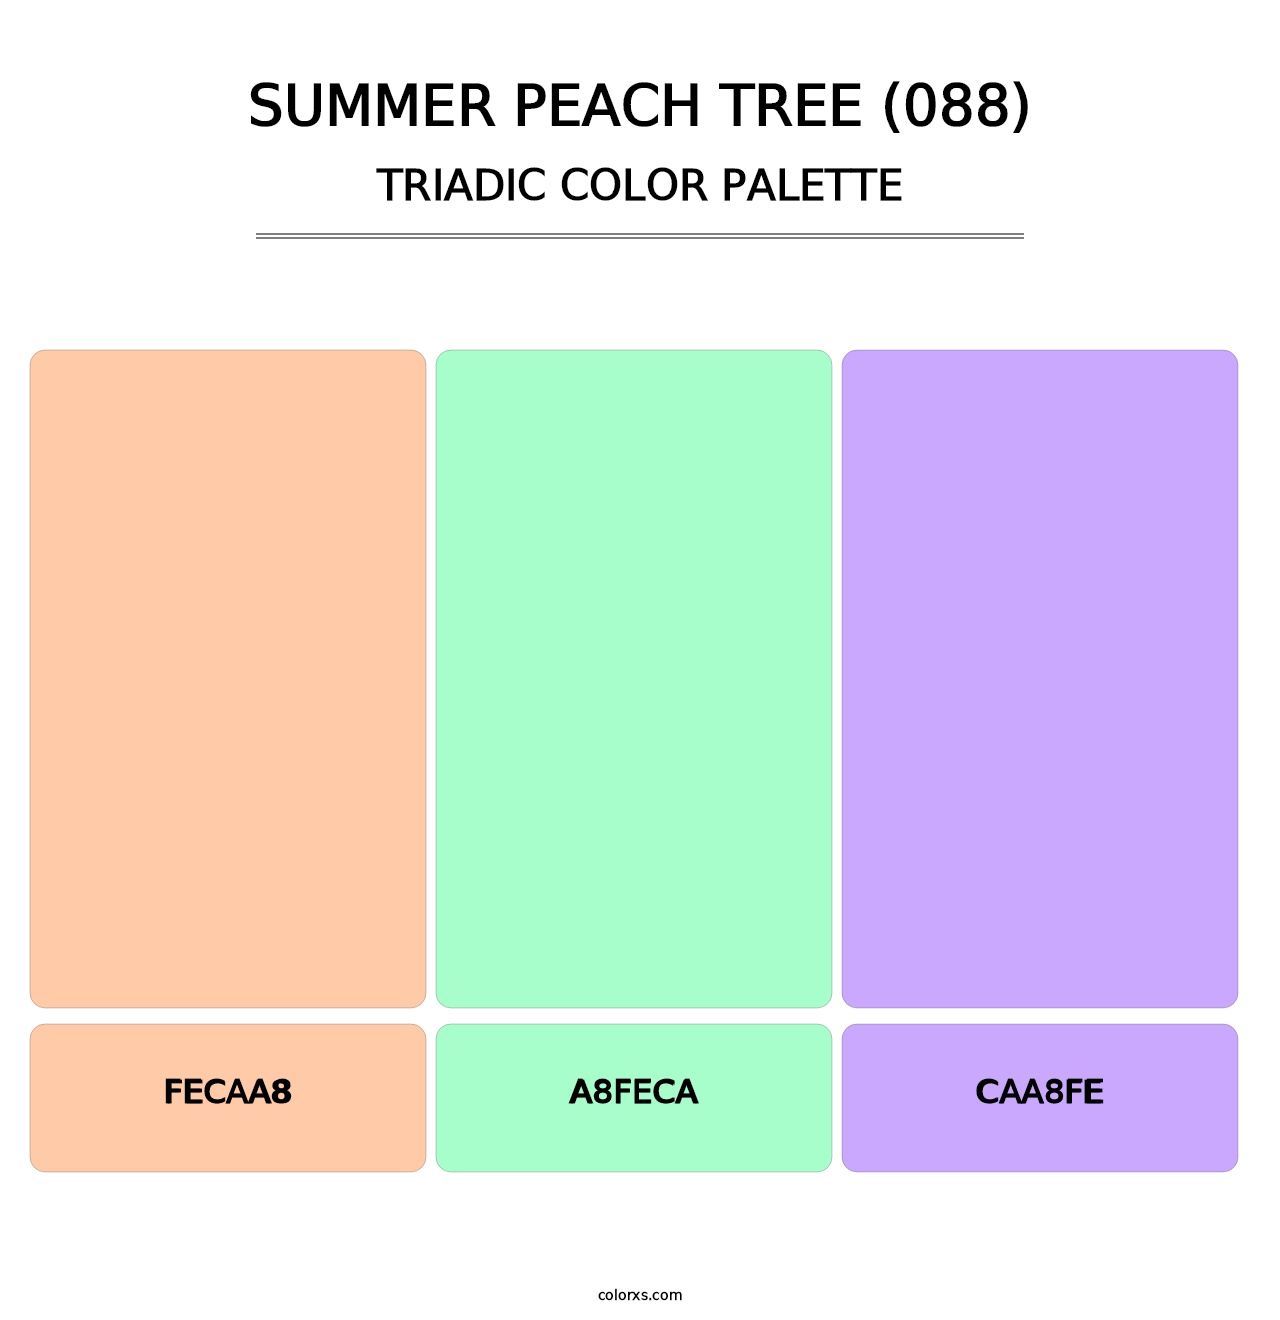 Summer Peach Tree (088) - Triadic Color Palette